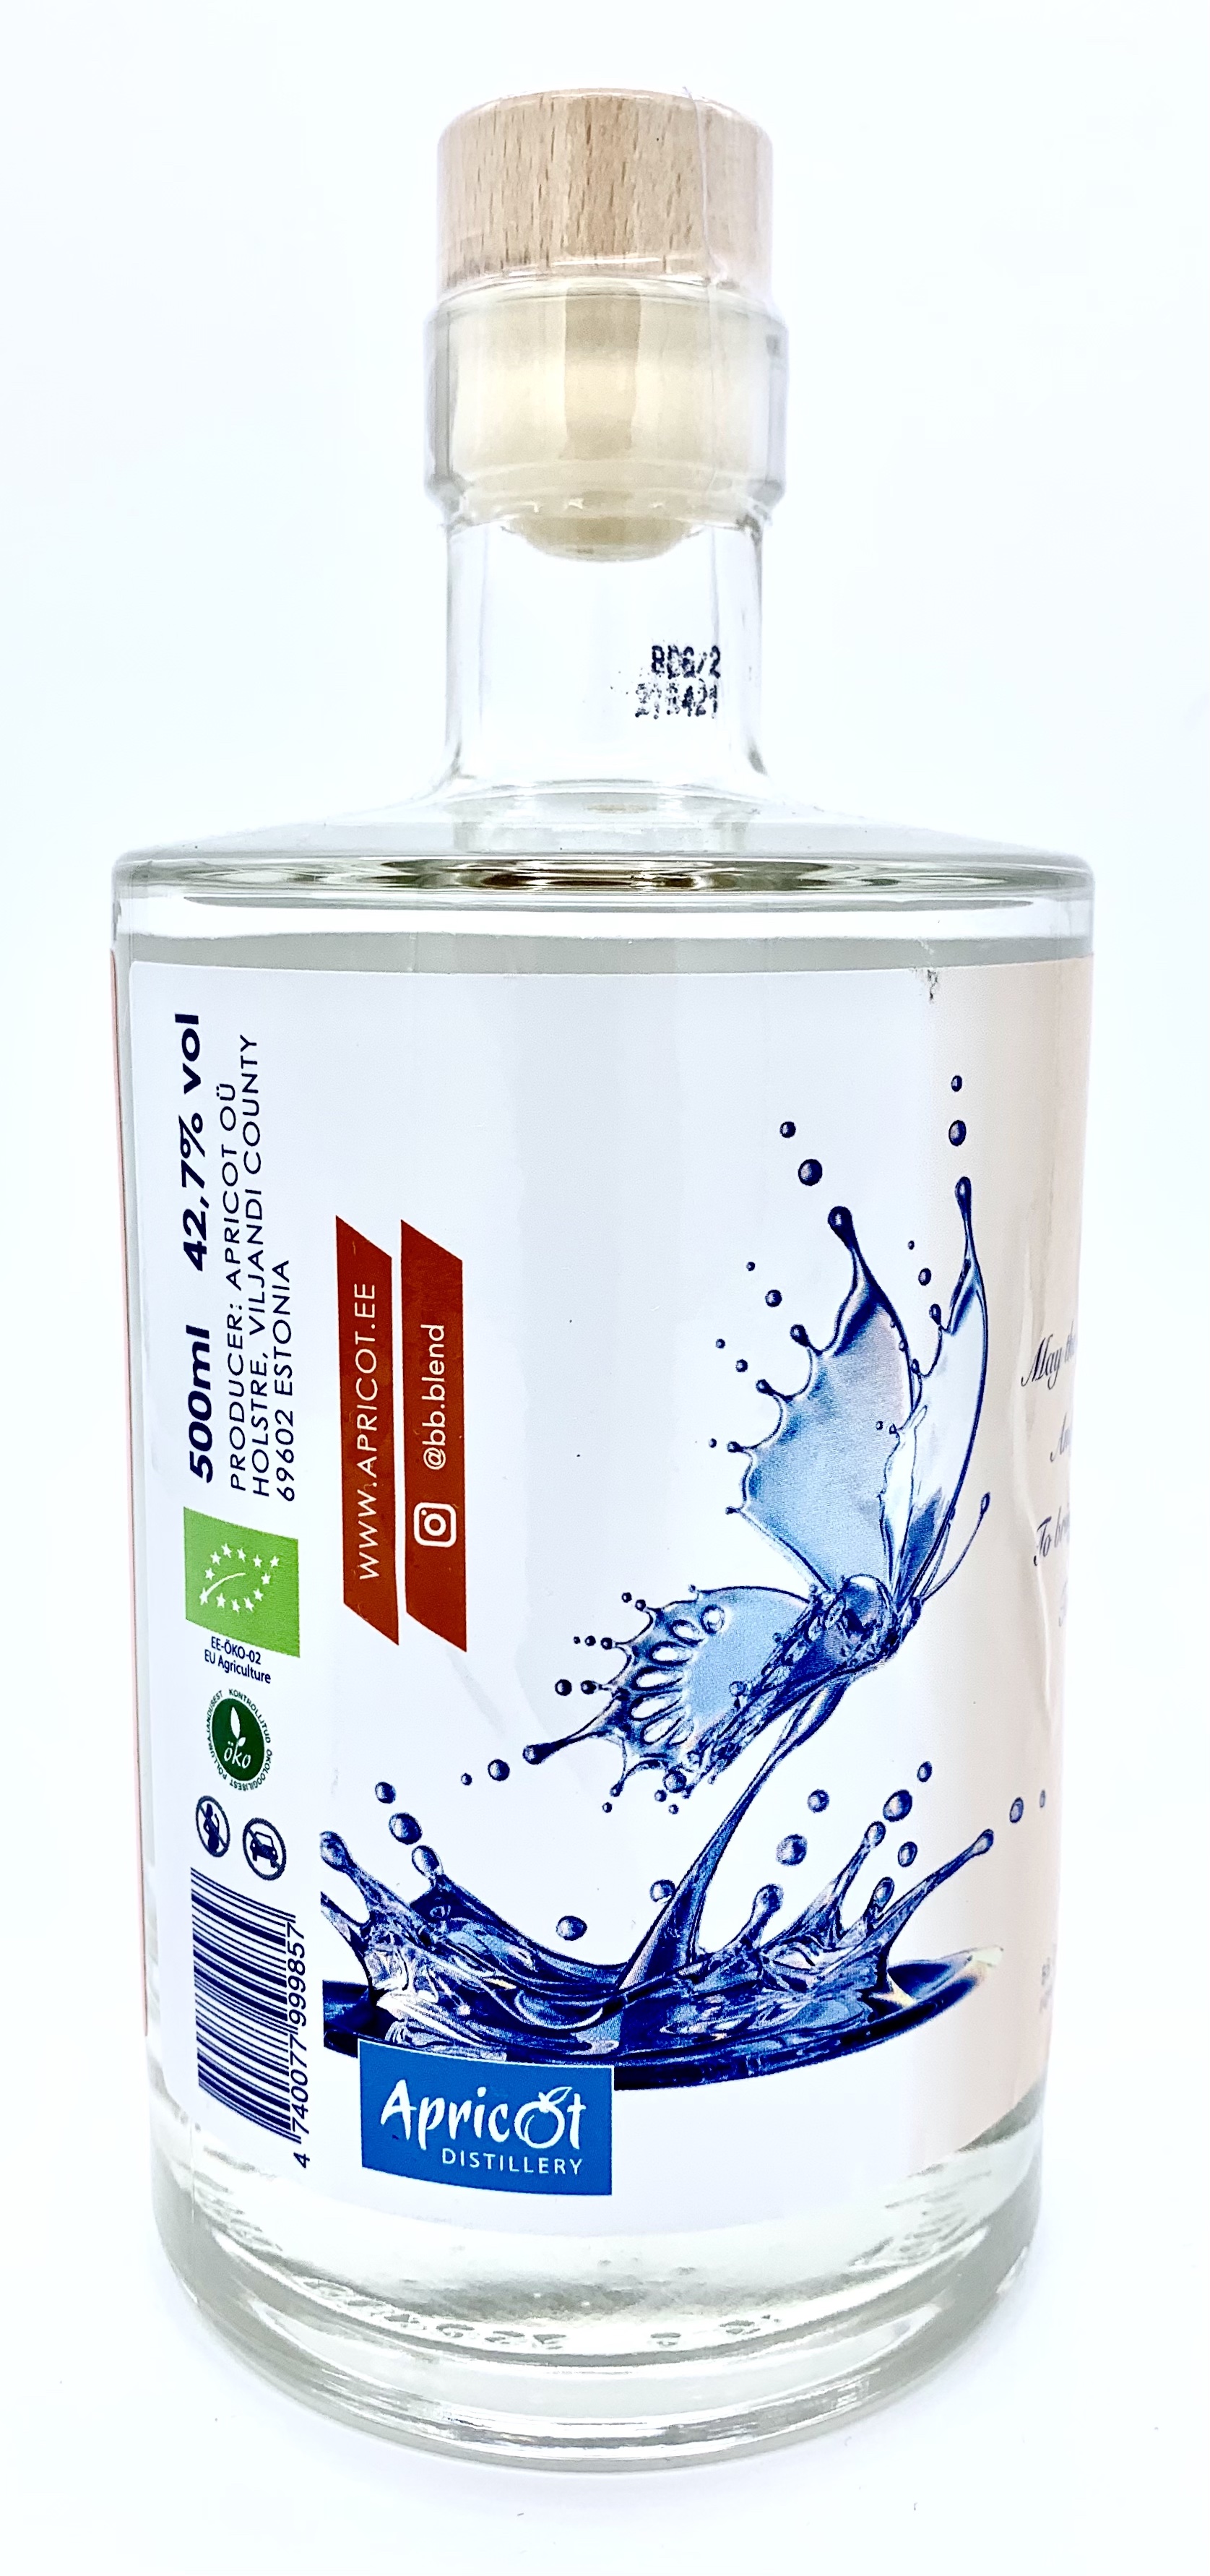 BIO Blue BB Butterfly Dry Gin 42,7%, 500 ml